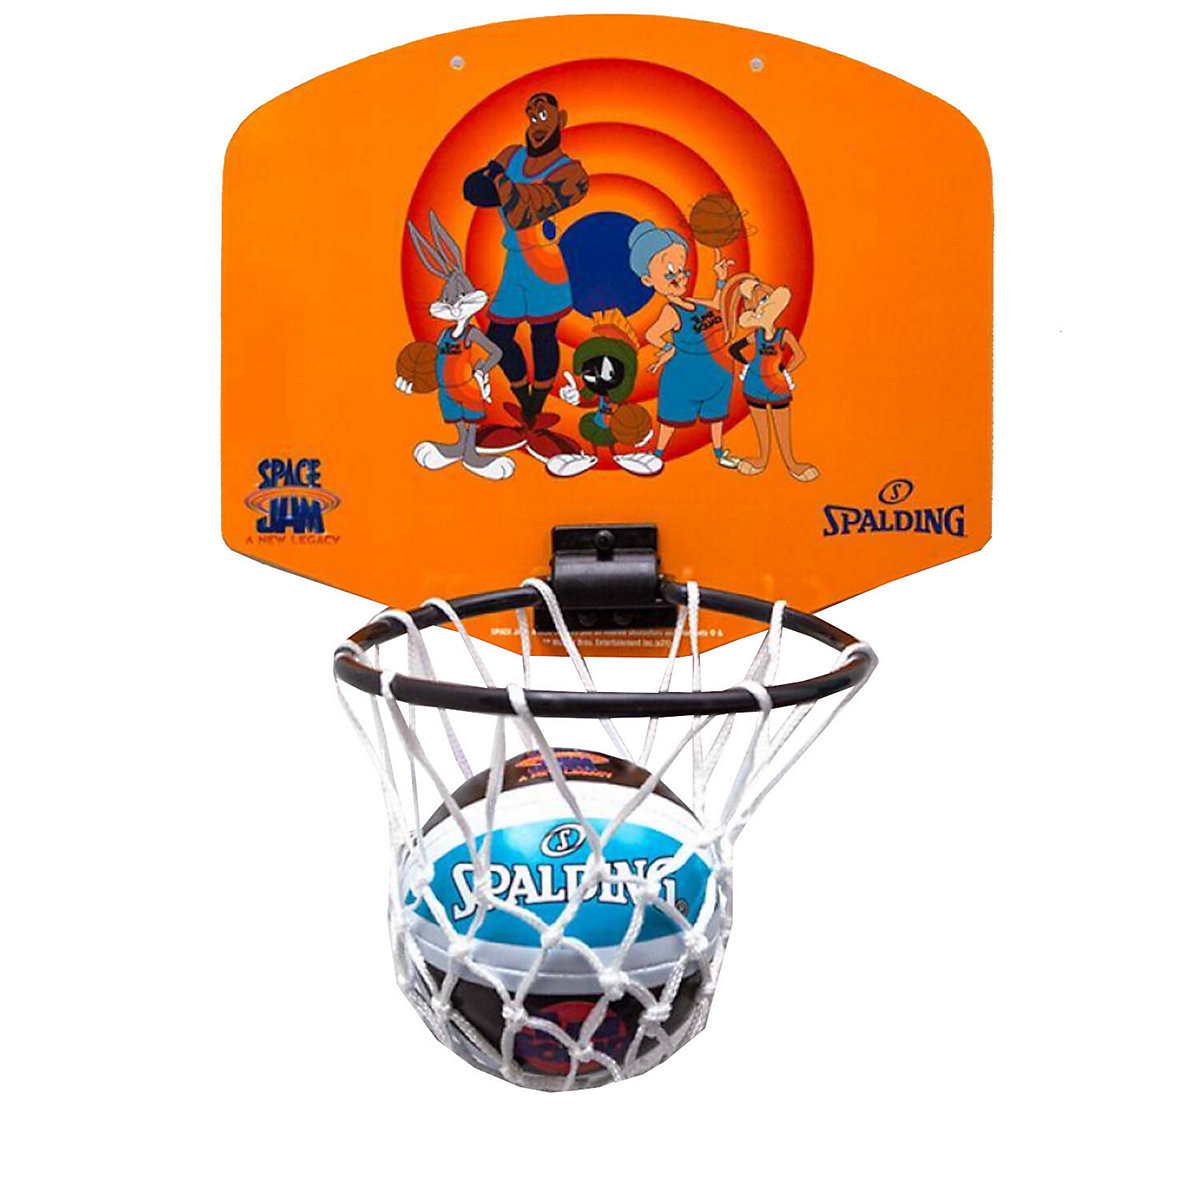 SPALDING Basketball-Rückwand Mini Basketball Set Space Jam 79006Z Basketballkörbe für Kinder